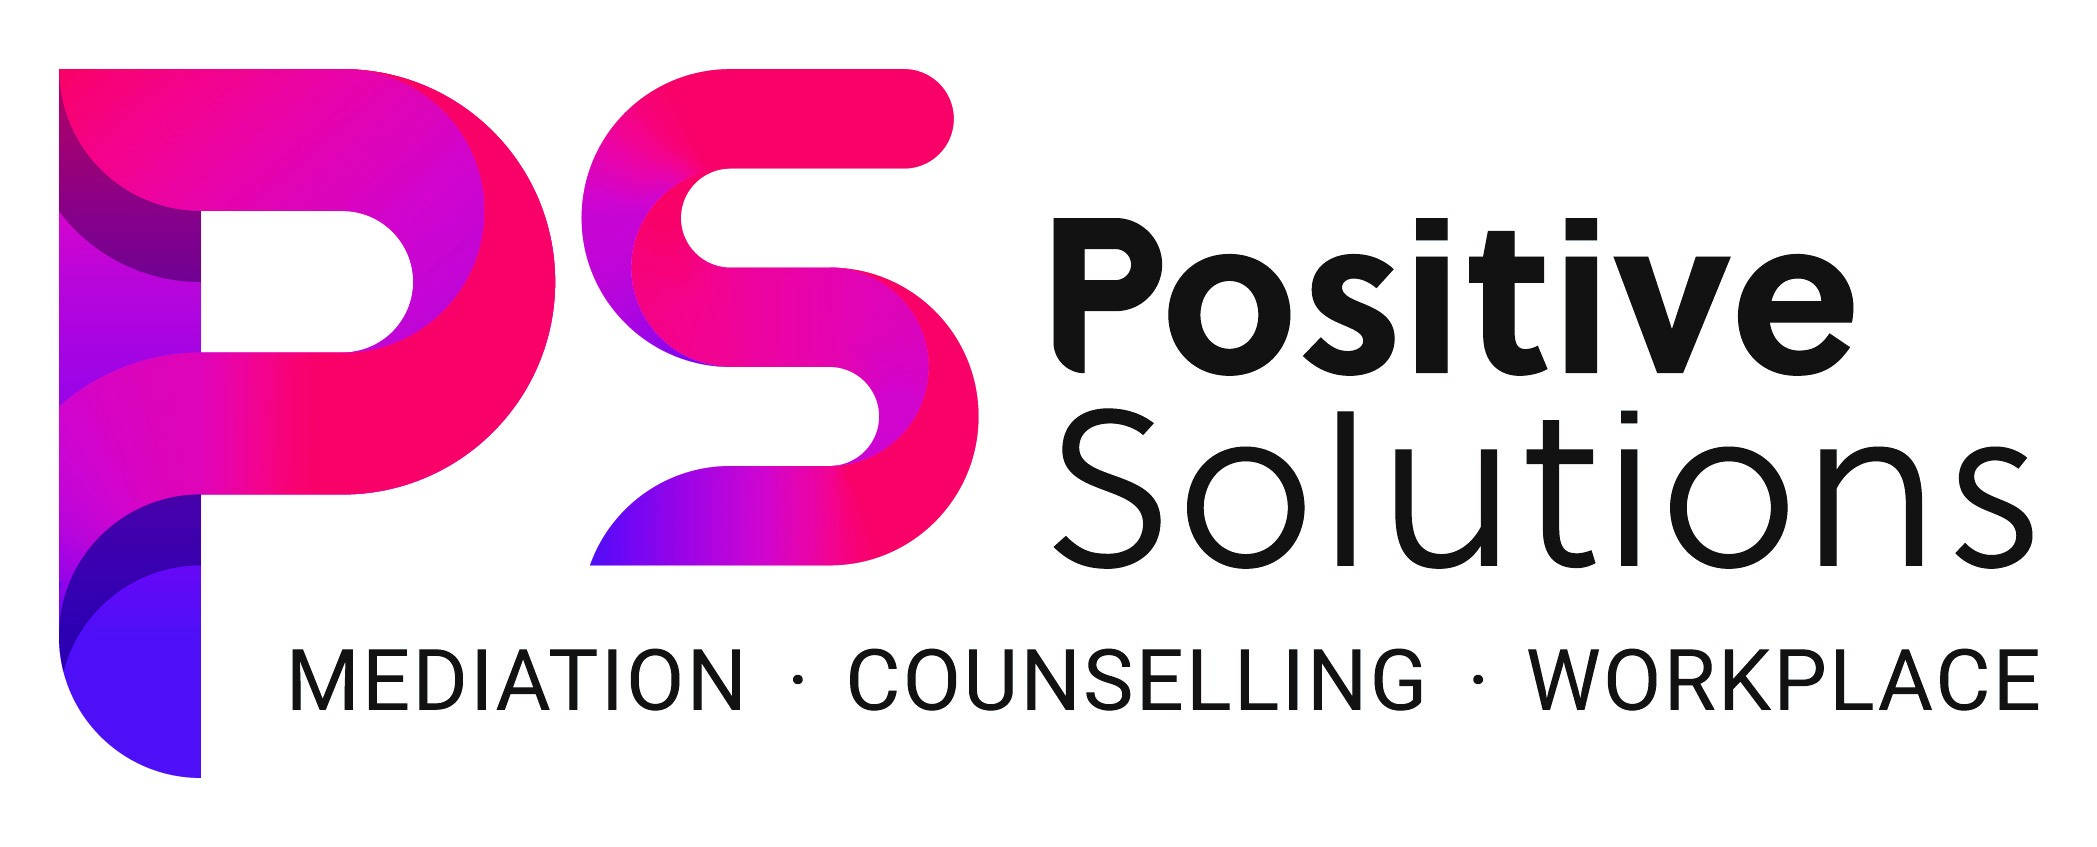 PS-Logo-Tagline.jpg